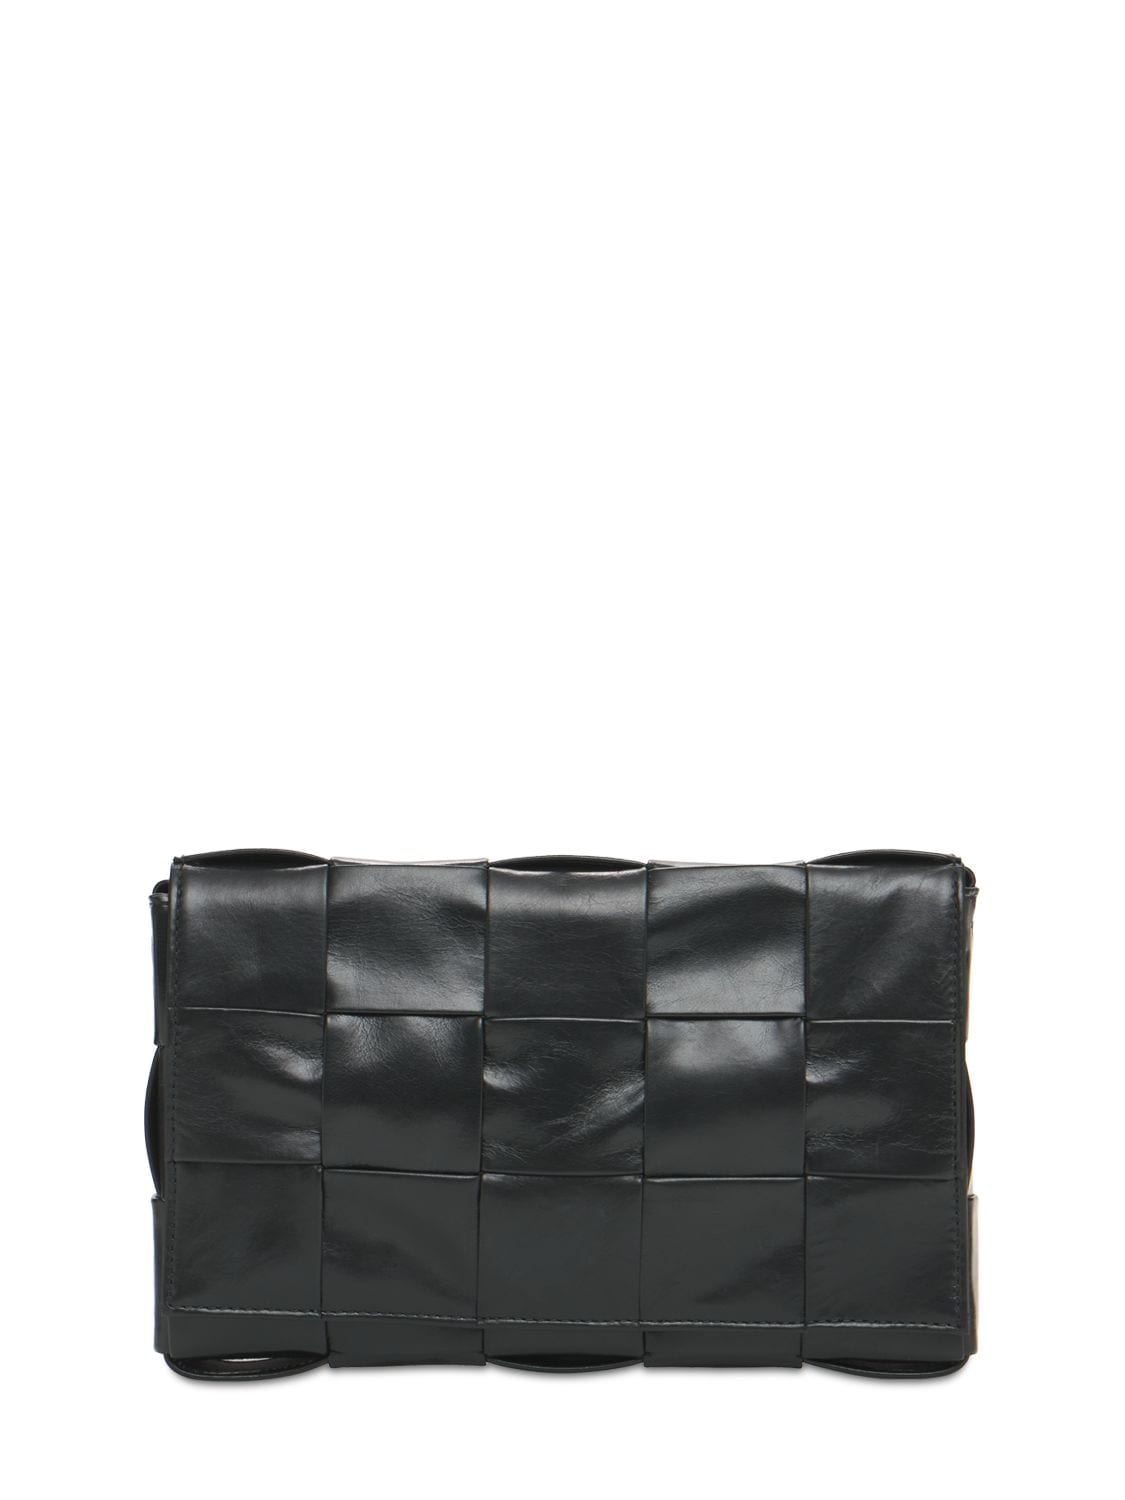 Image of Intreccio Leather Crossbody Bag